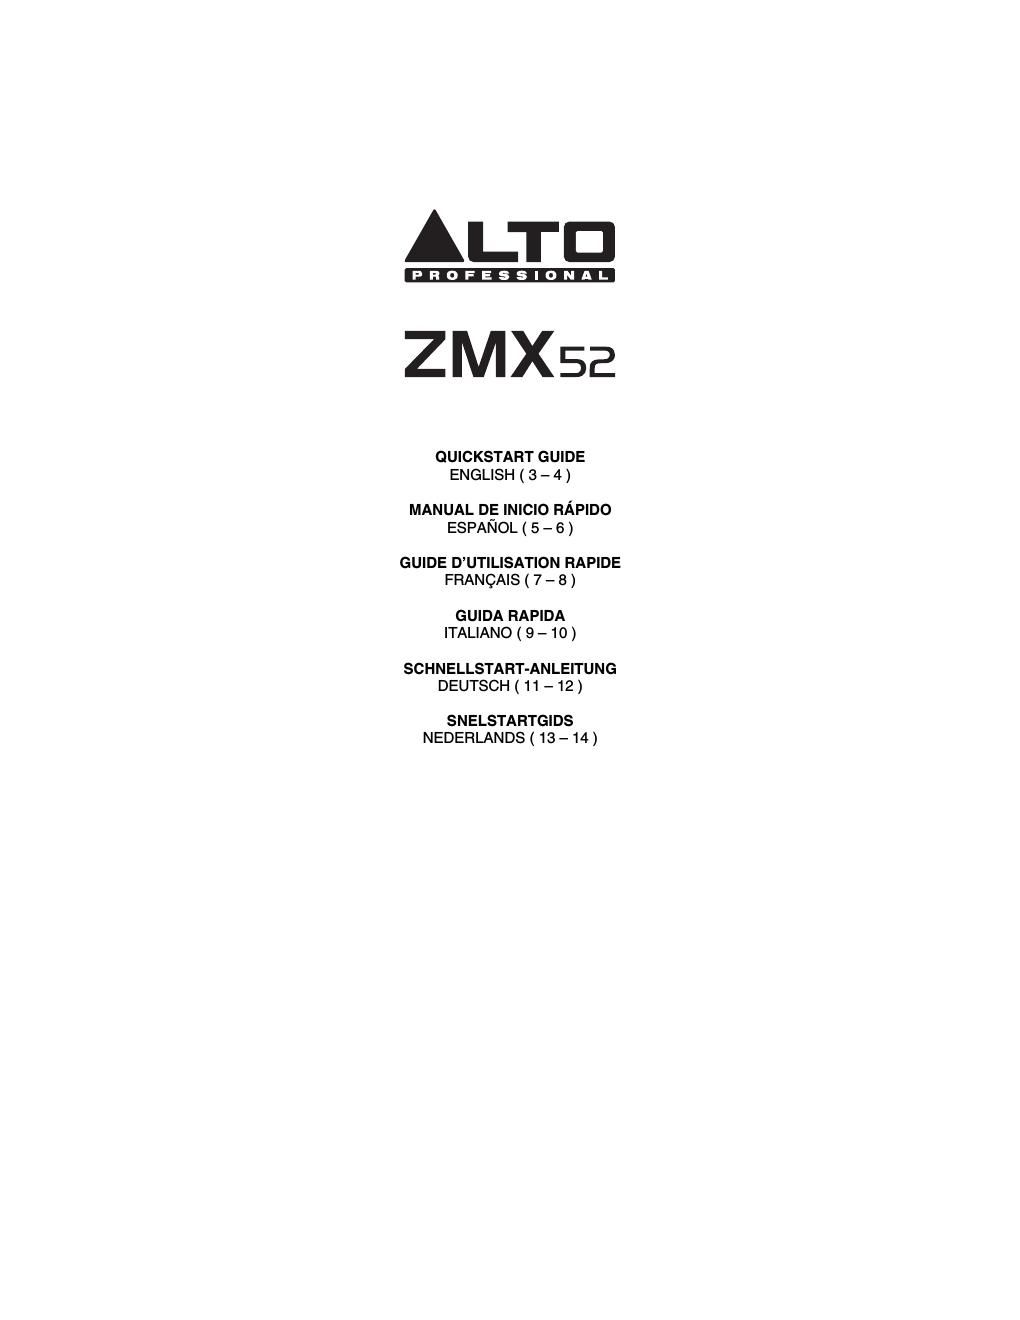 alto zmx 52 quickstart guide